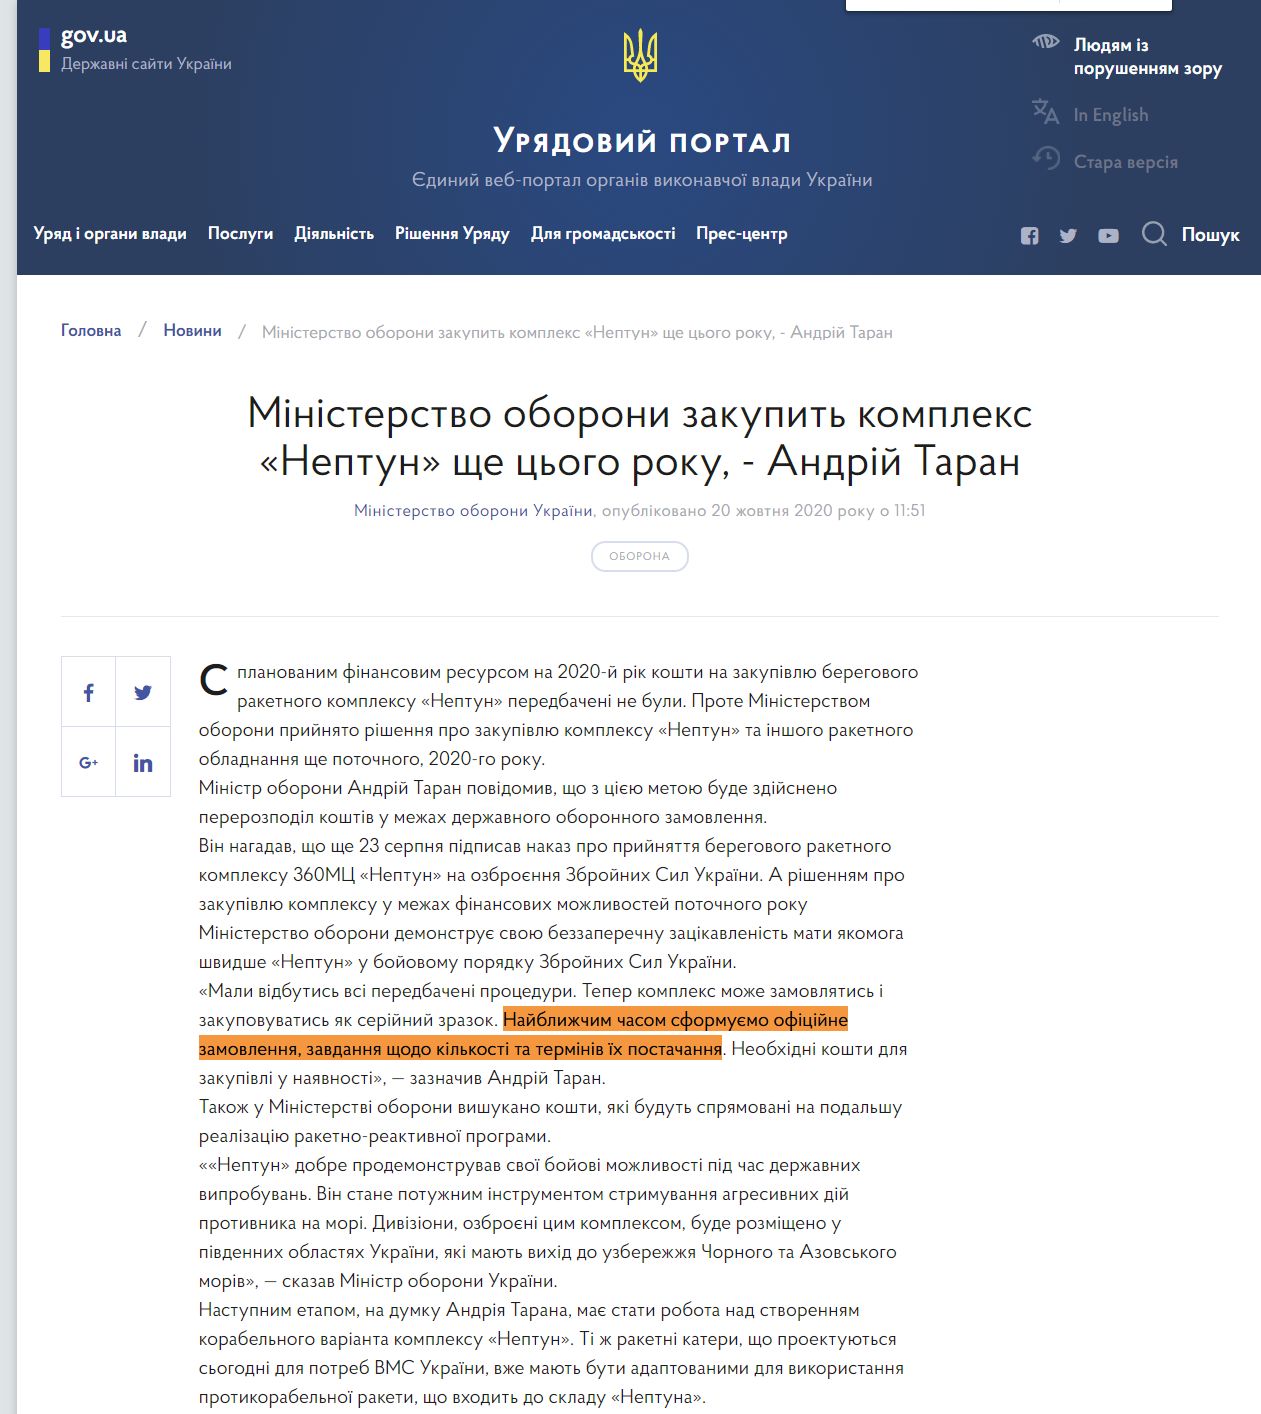 https://www.kmu.gov.ua/news/ministerstvo-oboroni-zakupit-kompleks-neptun-shche-cogo-roku-andrij-taran